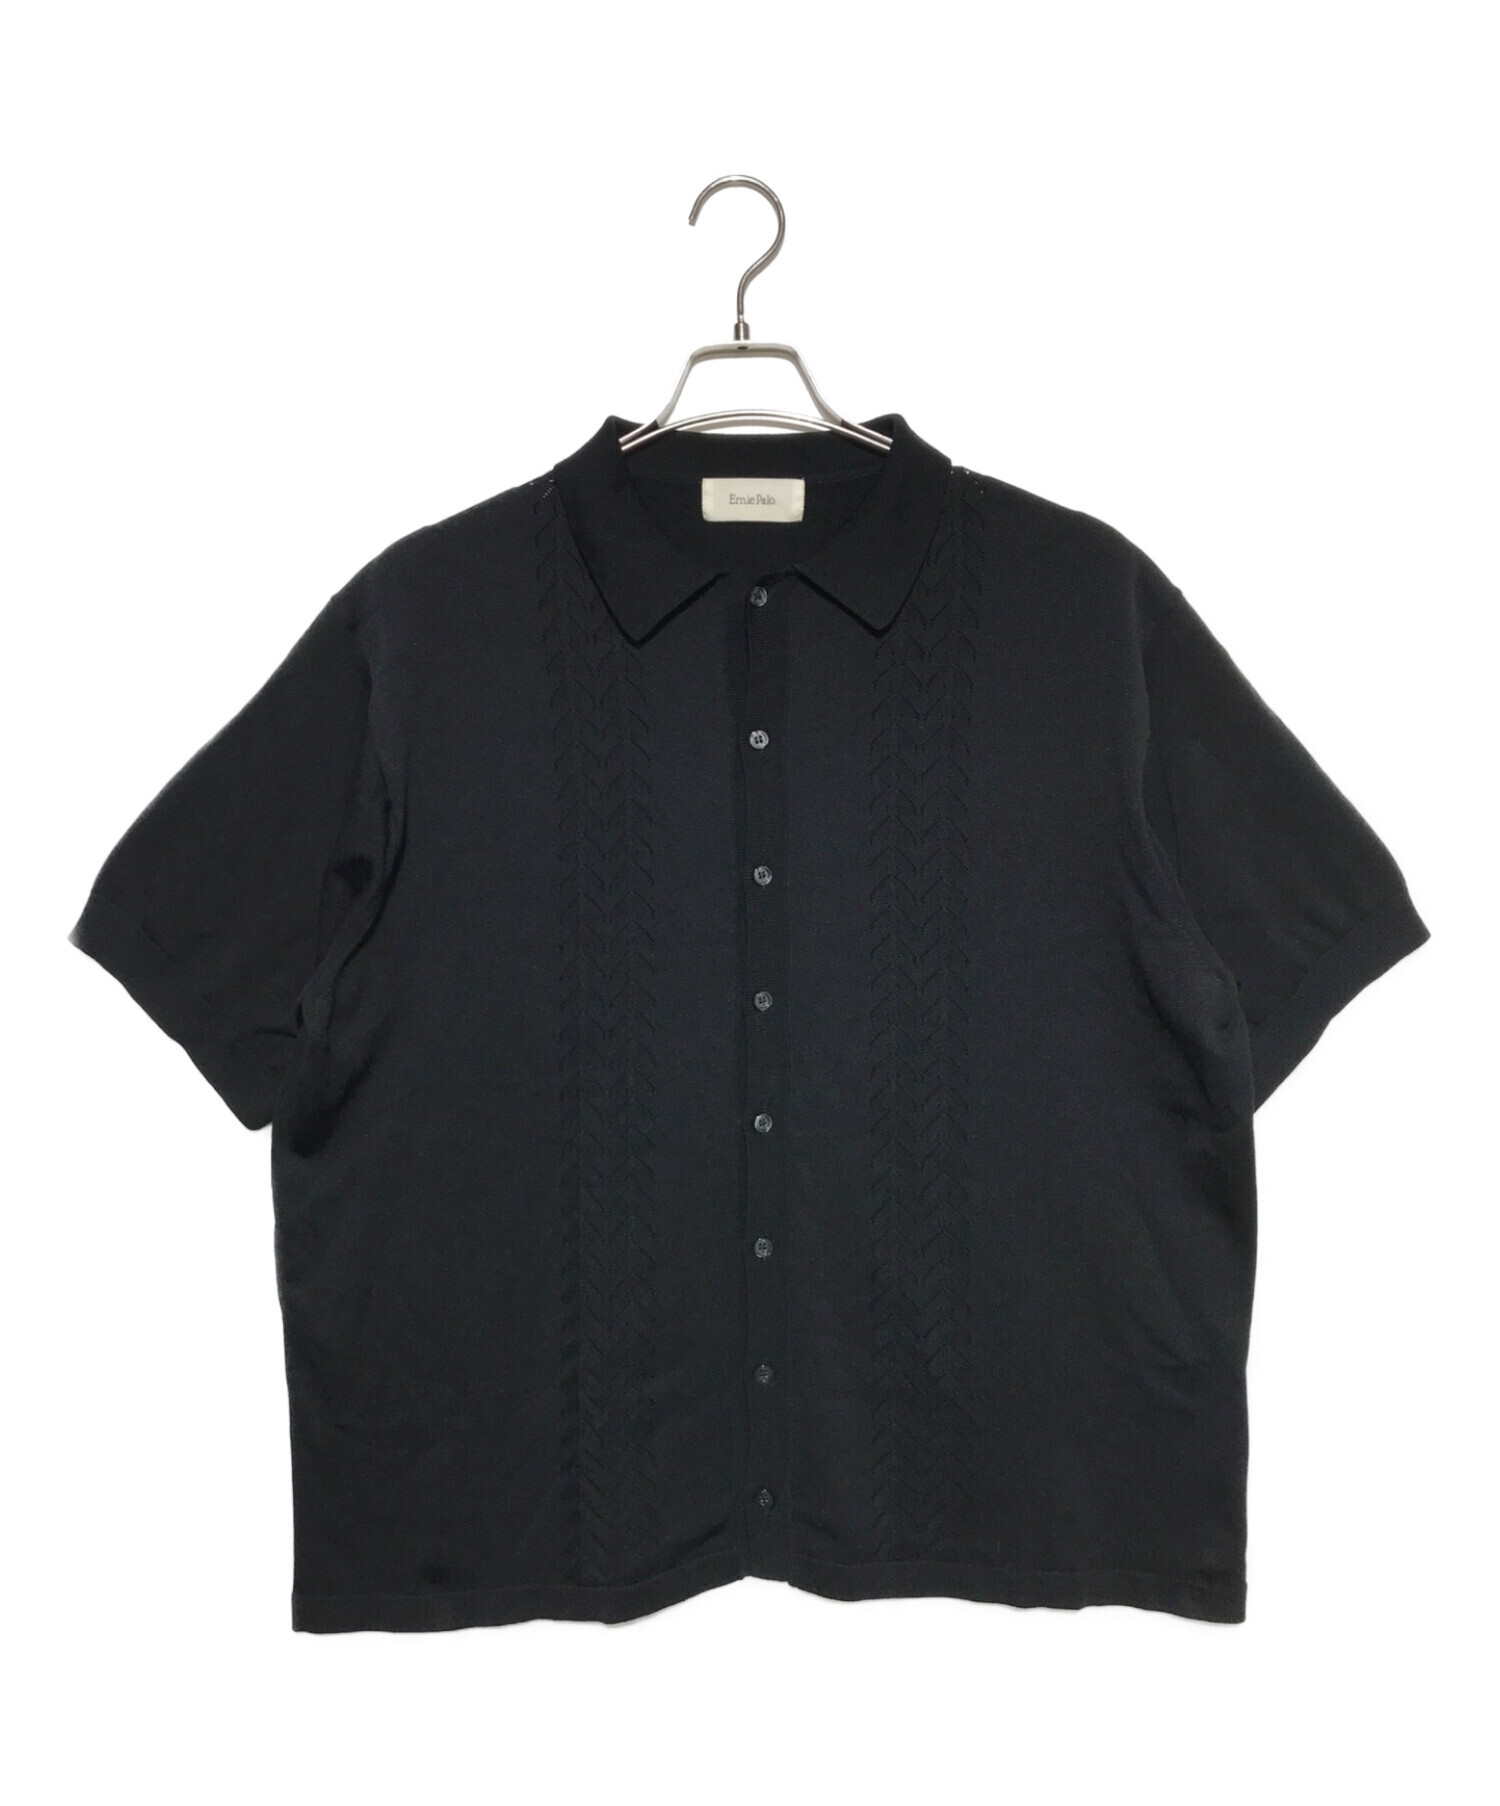 Ernie Palo (アーニーパロ) S/S Knit ポロシャツ ブラック サイズ:50